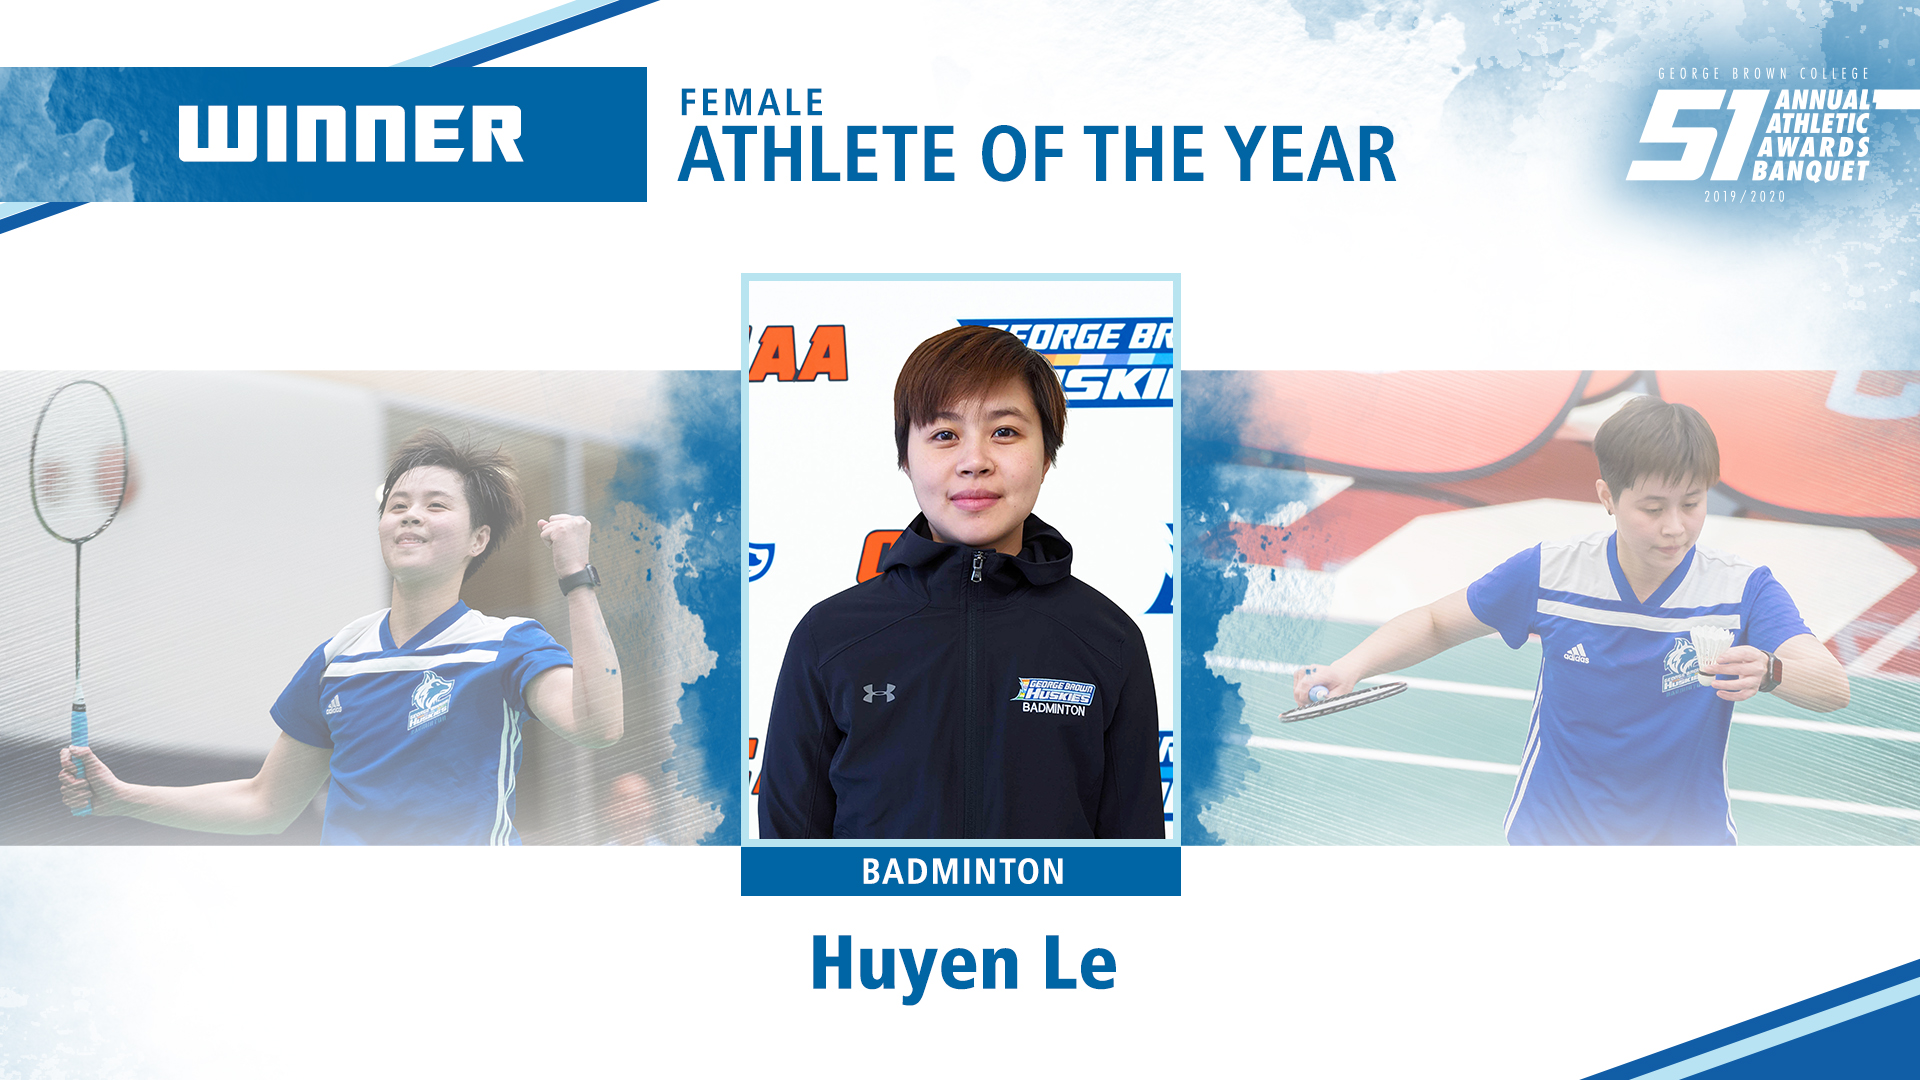 winnerfemale athlete of the yearbadminton Huyen Le